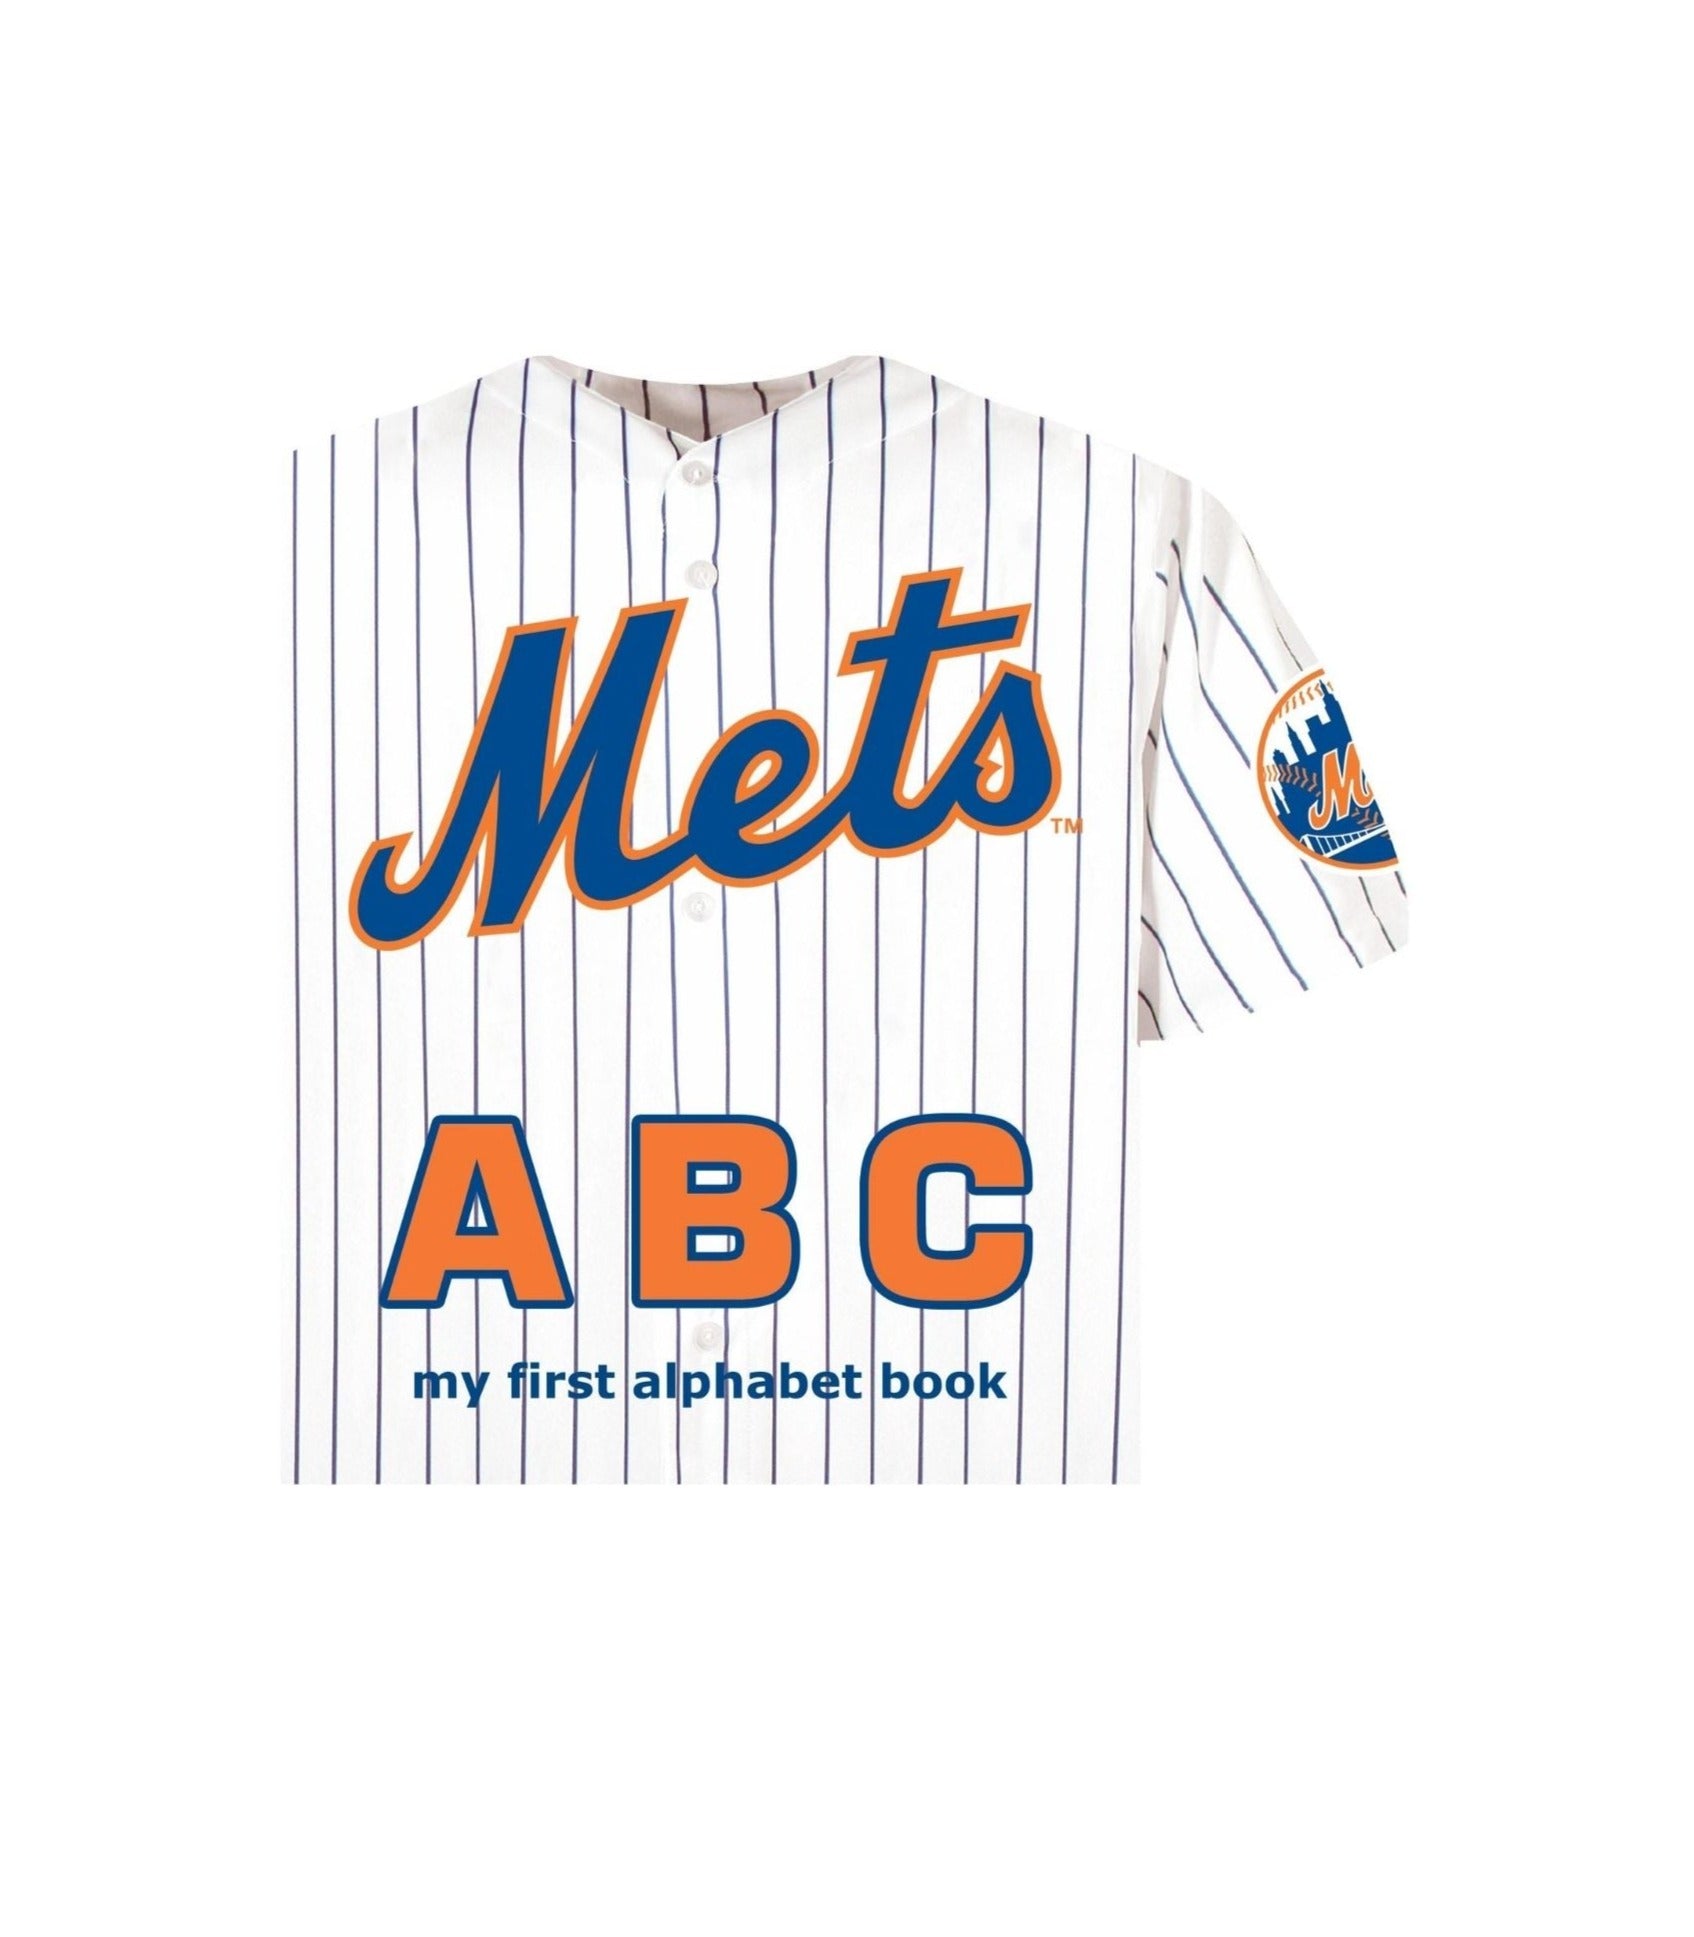 Official New York Mets Gear, Mets Jerseys, Store, New York Pro Shop,  Apparel